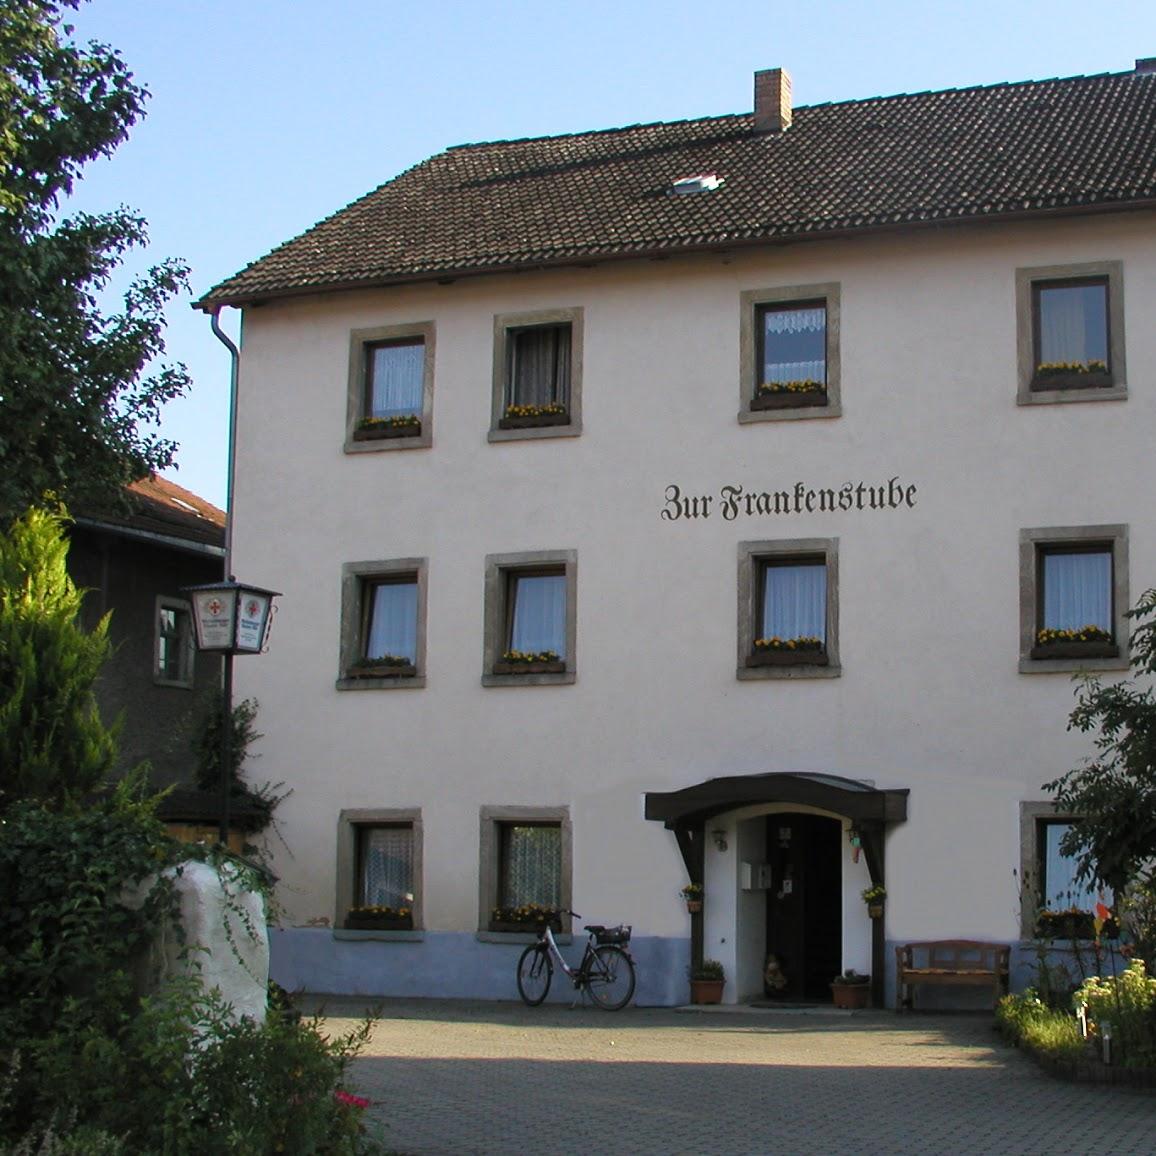 Restaurant "Gästehaus Frankenstube" in Treuchtlingen